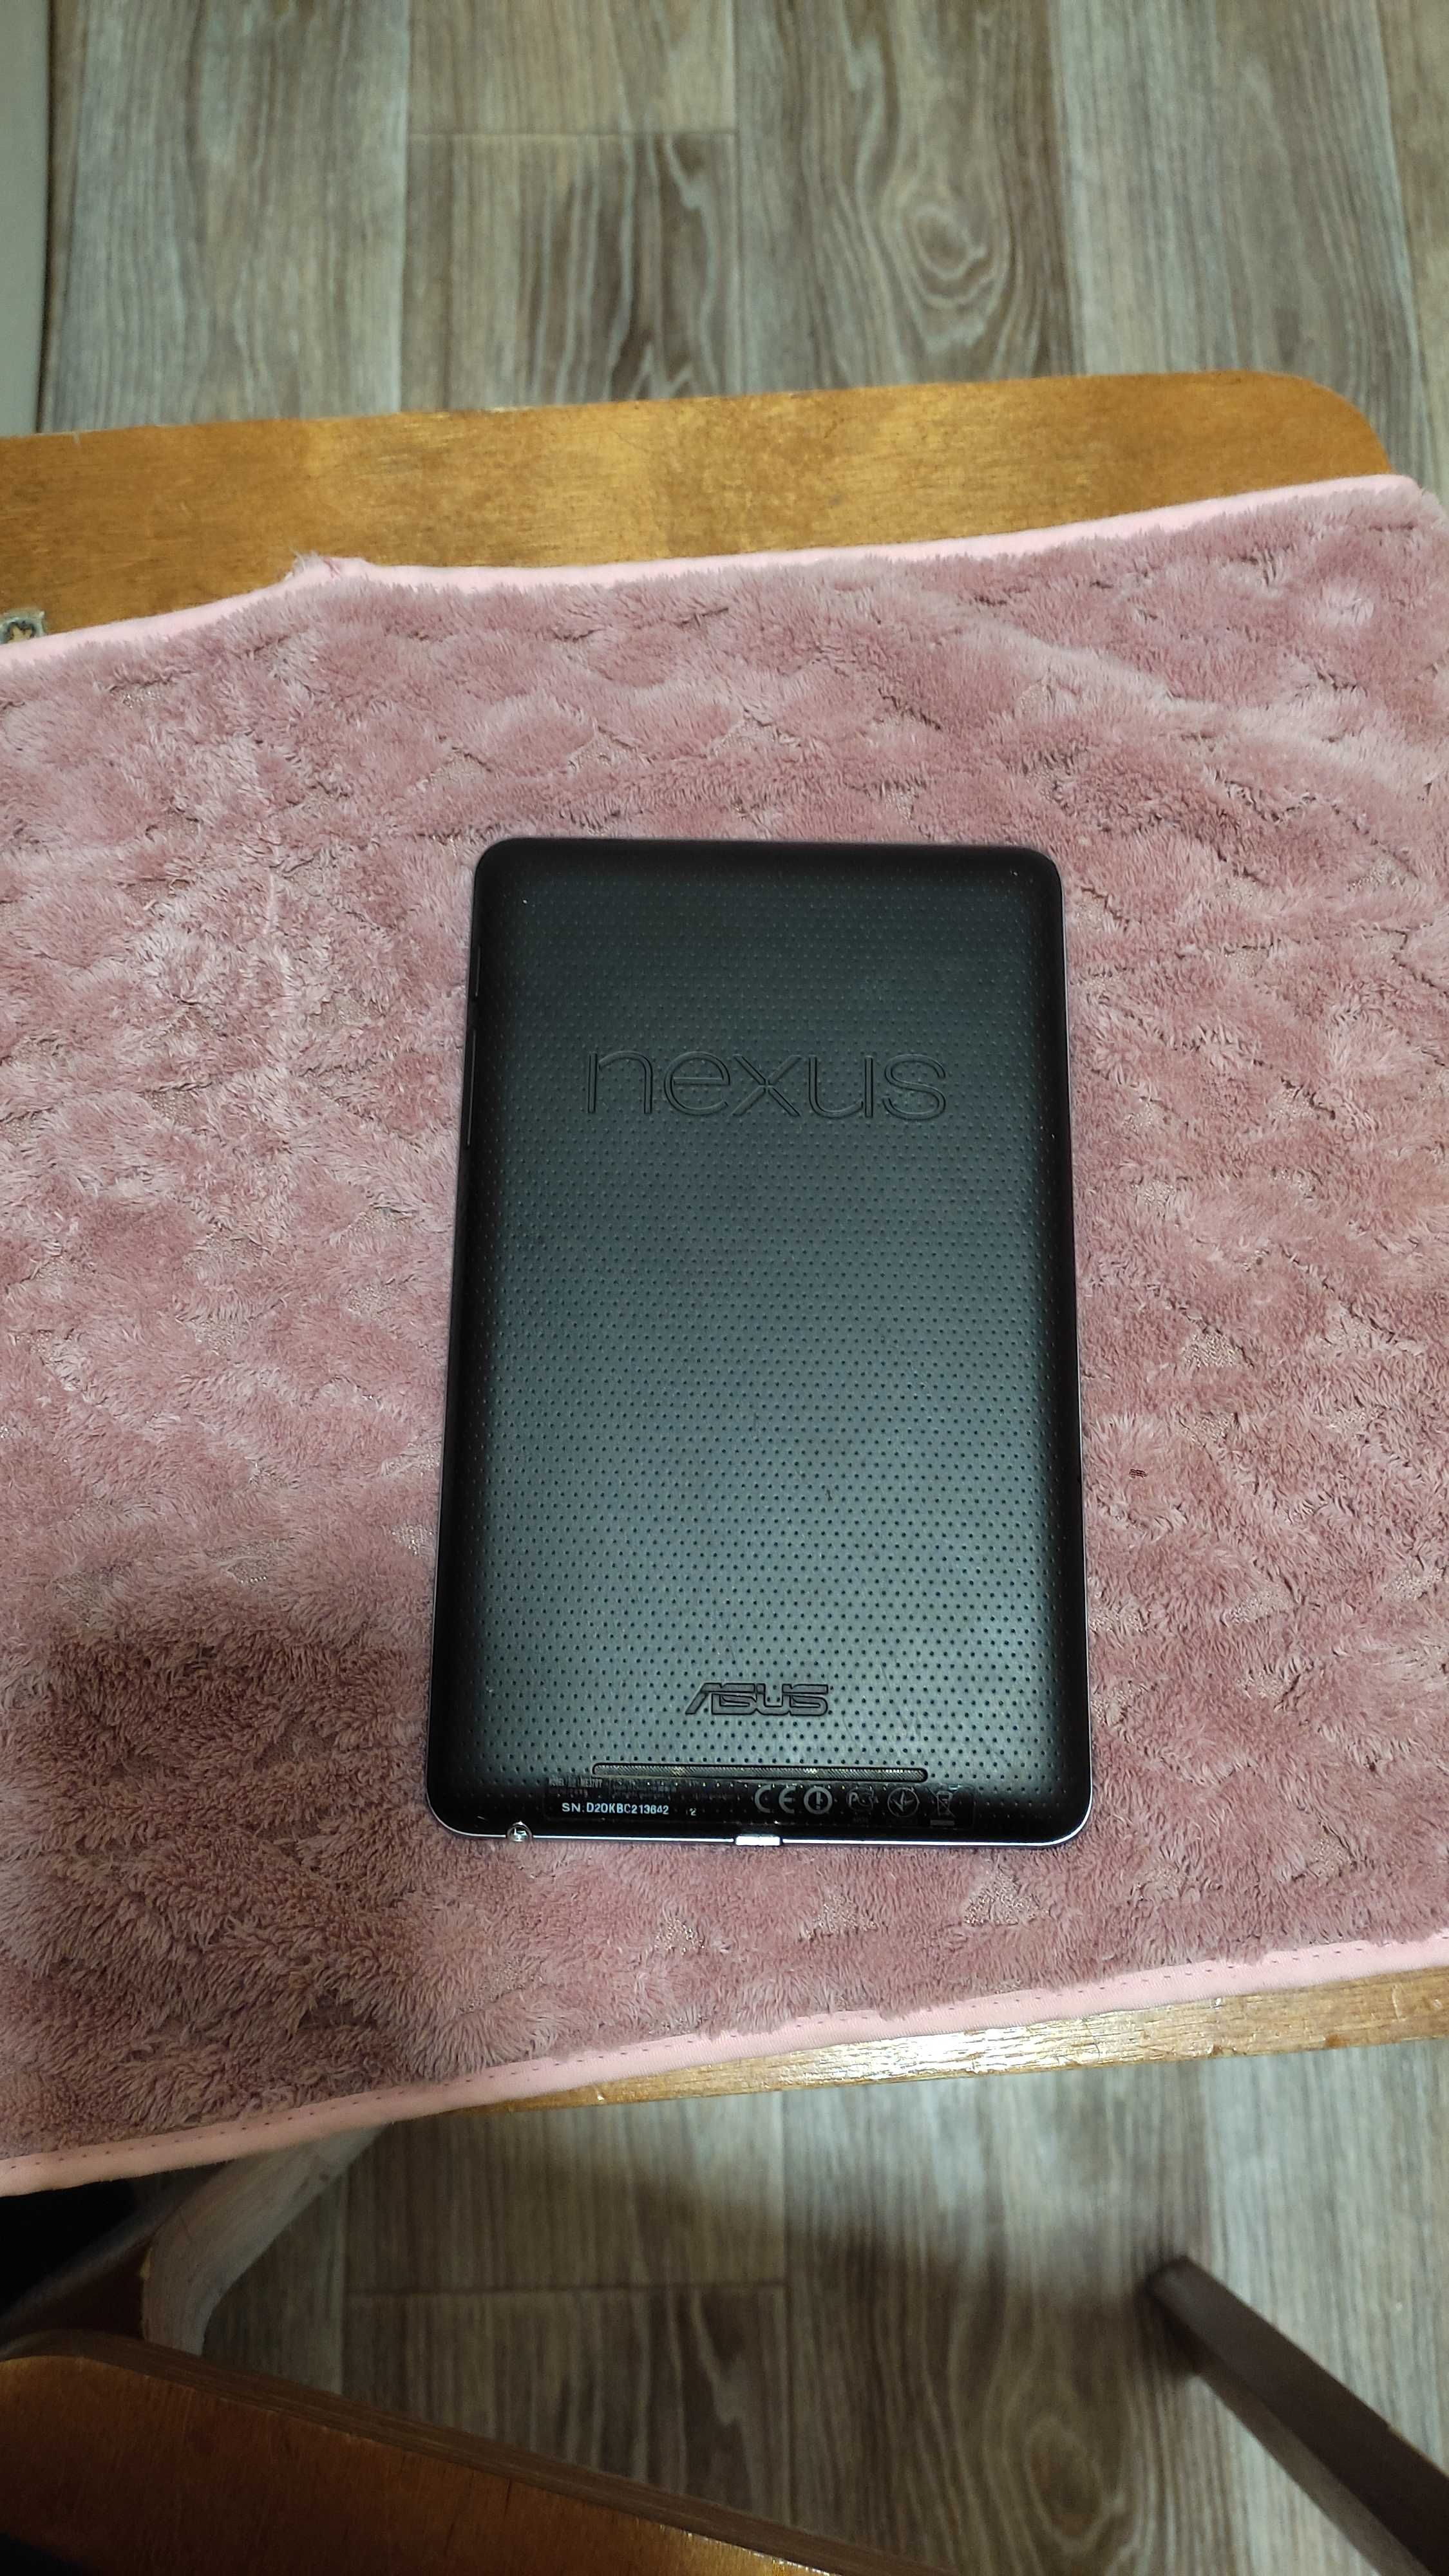 Asus Nexus7 2012